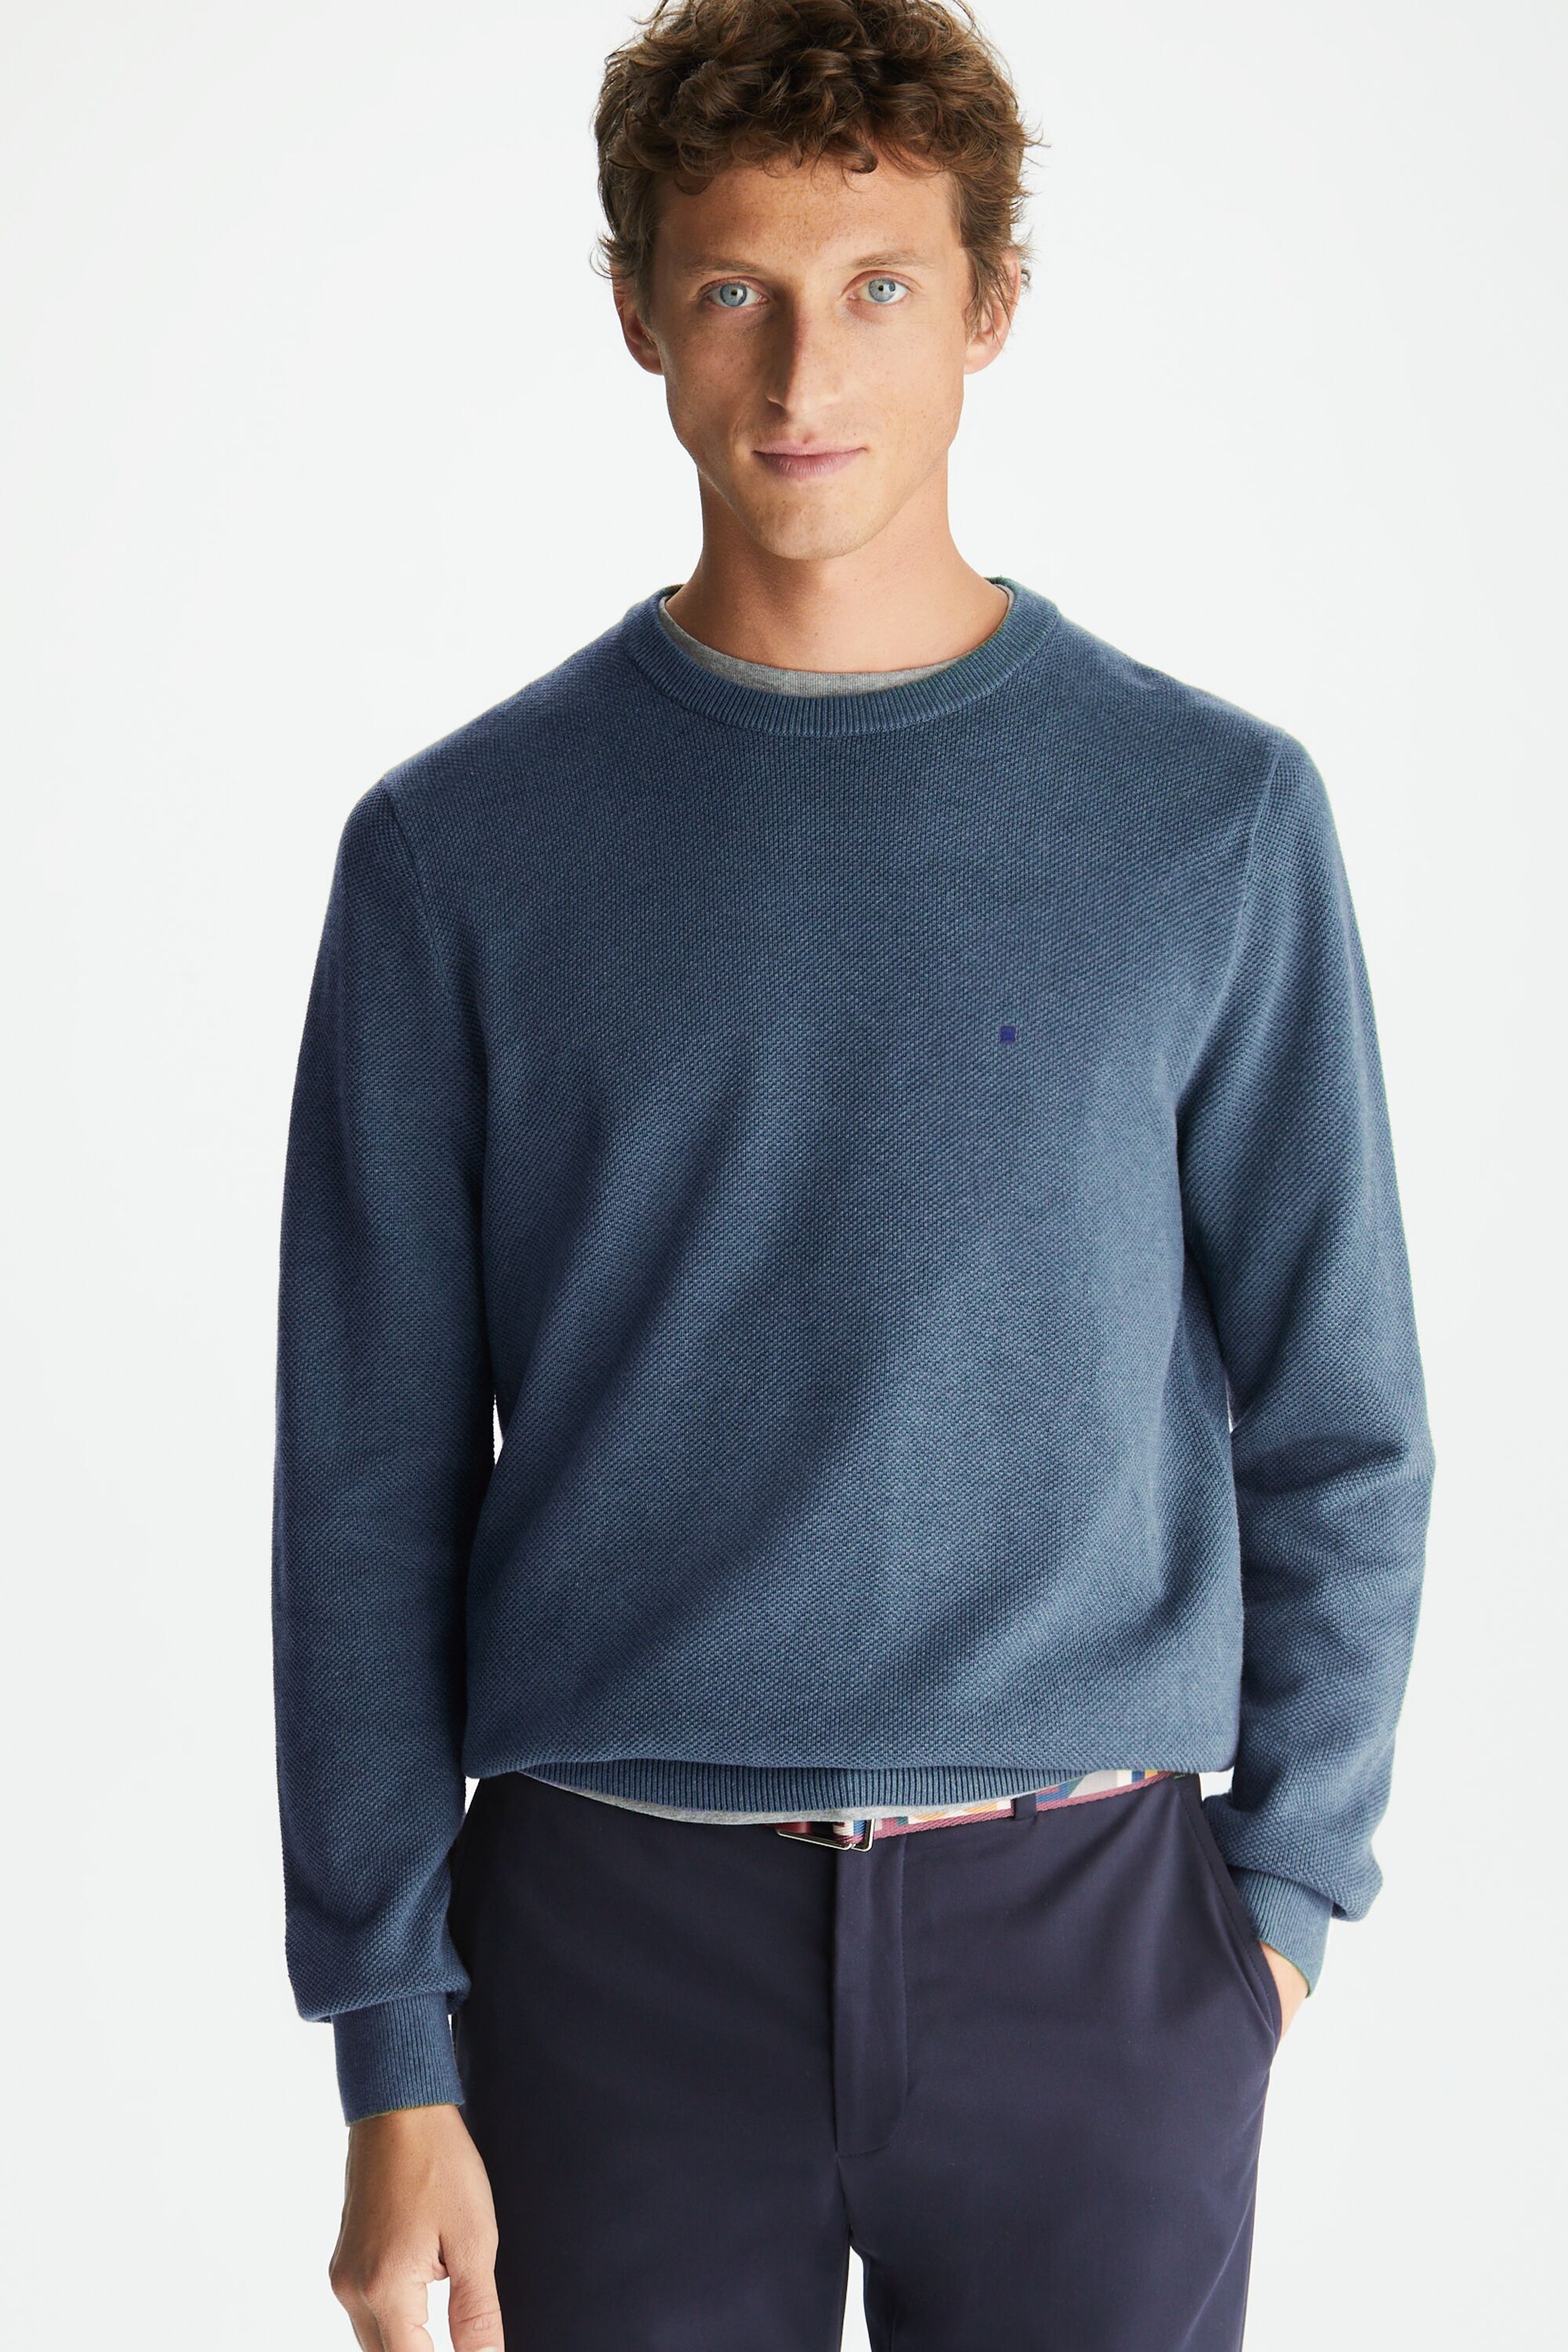 Structured cotton sweater grayish blue - Purificacion Garcia Portugal